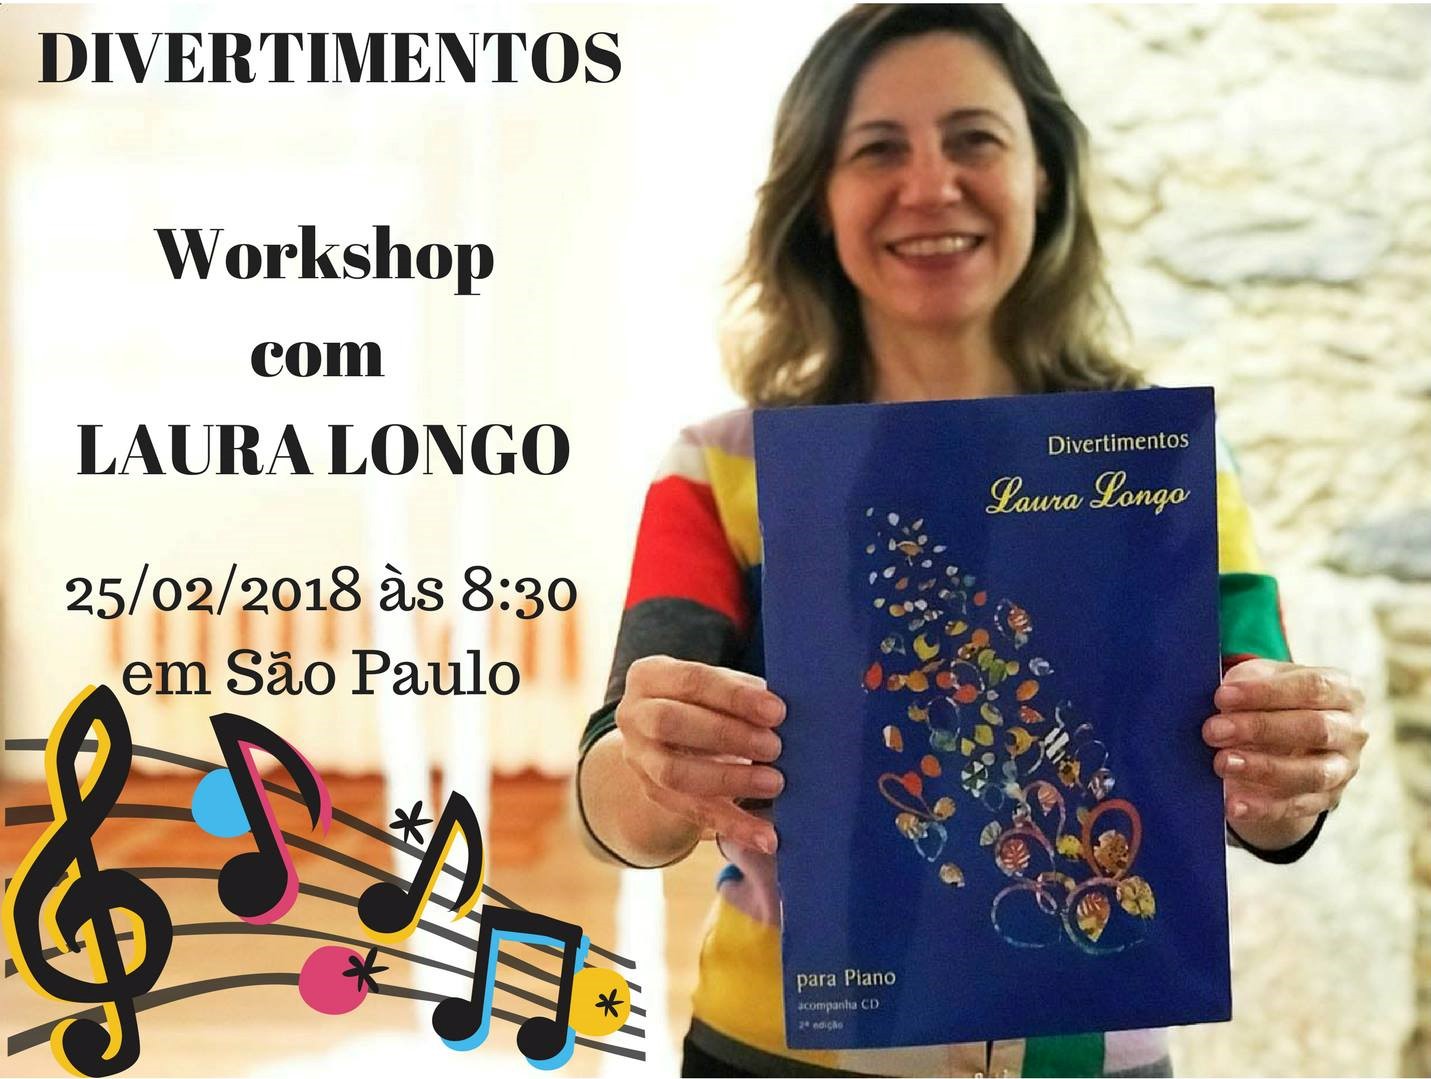 lauralongo-workshop-divertimentos-jan2018